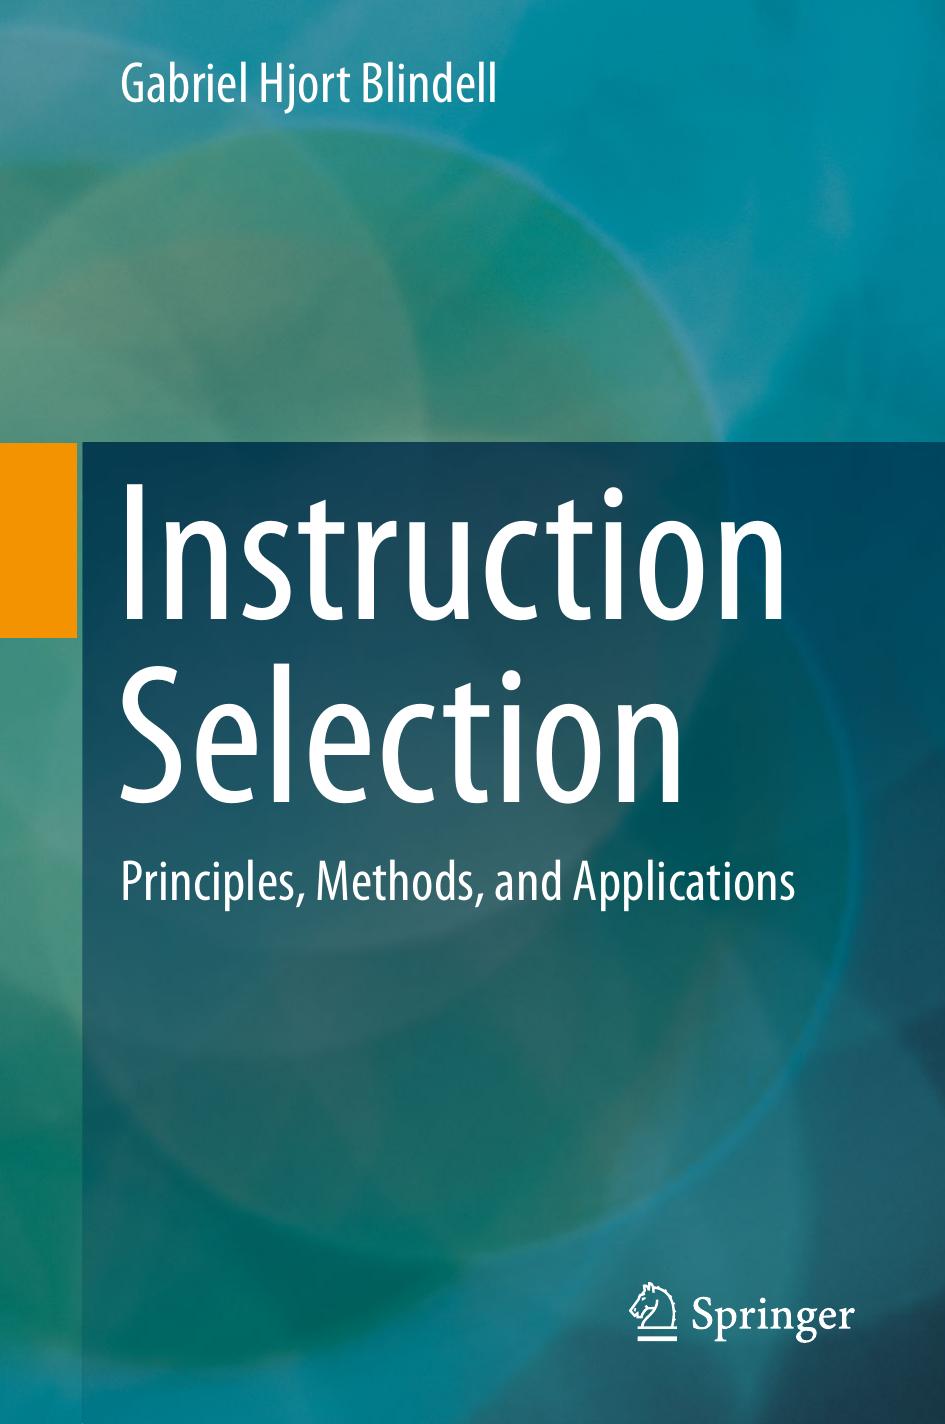 Instruction Selection  Principles, Methods, and Applications-Springer International Publishing (2016)